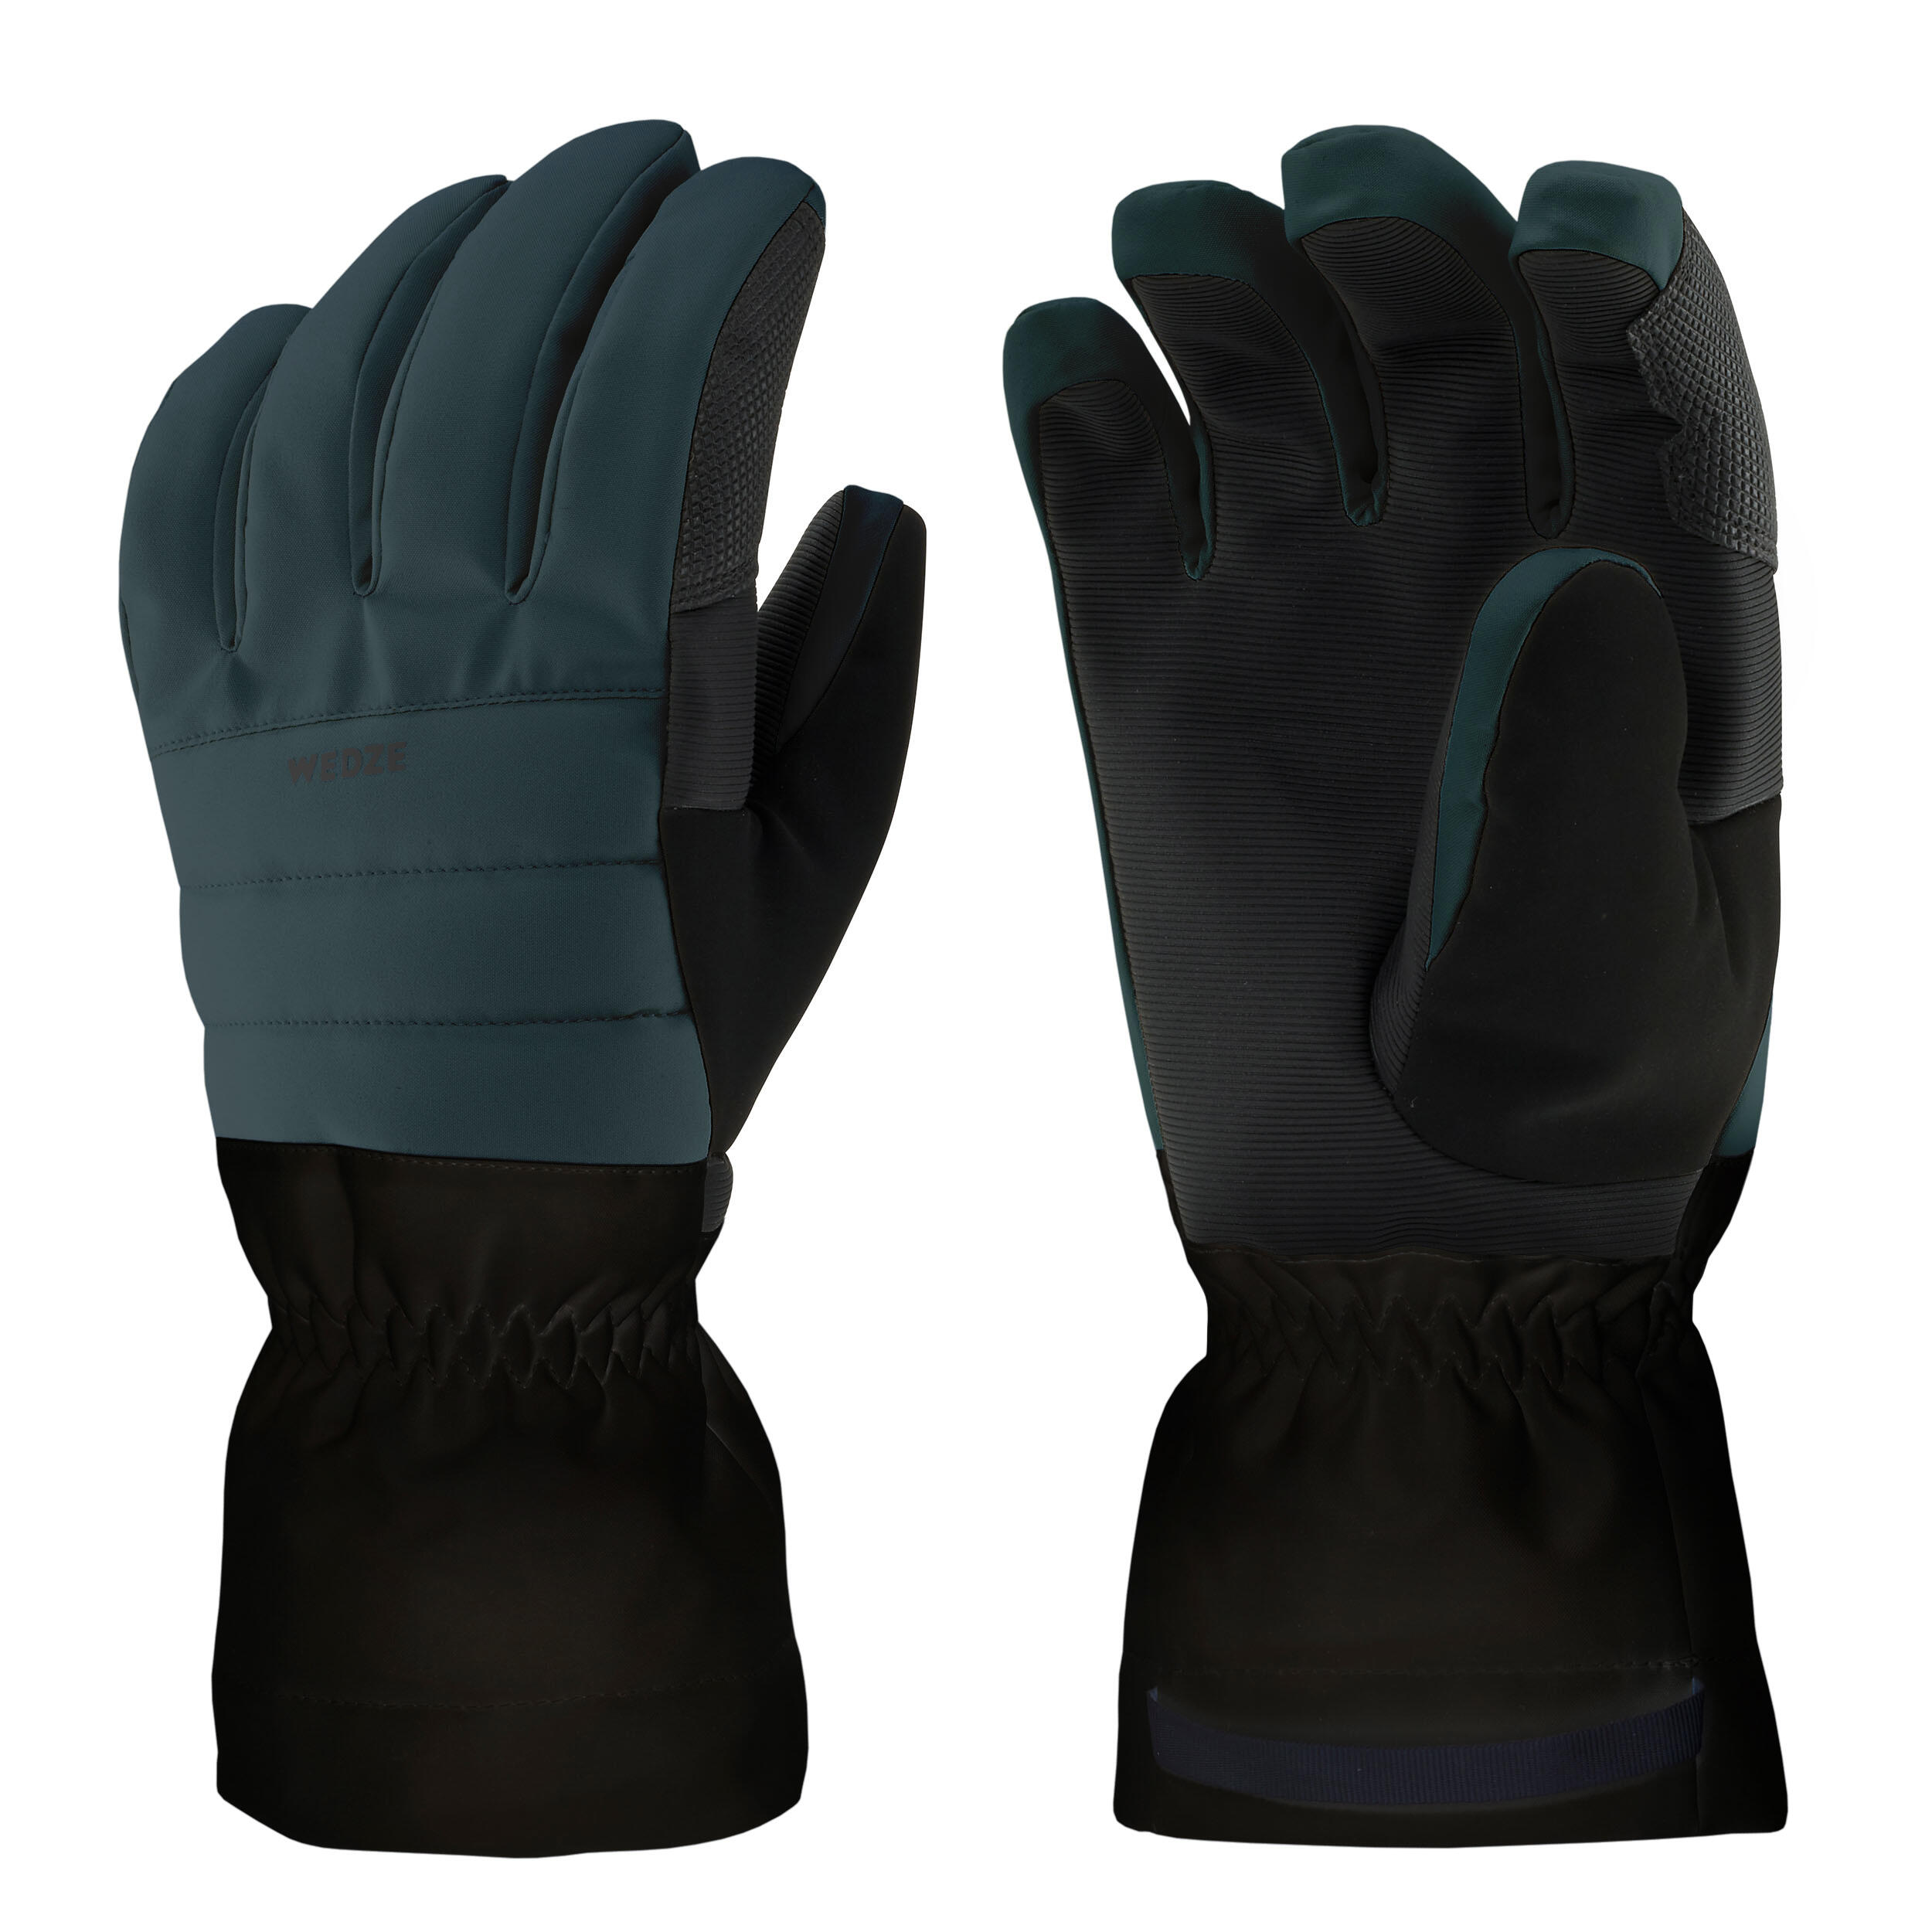 Men's Snowboard Mittens and Gloves